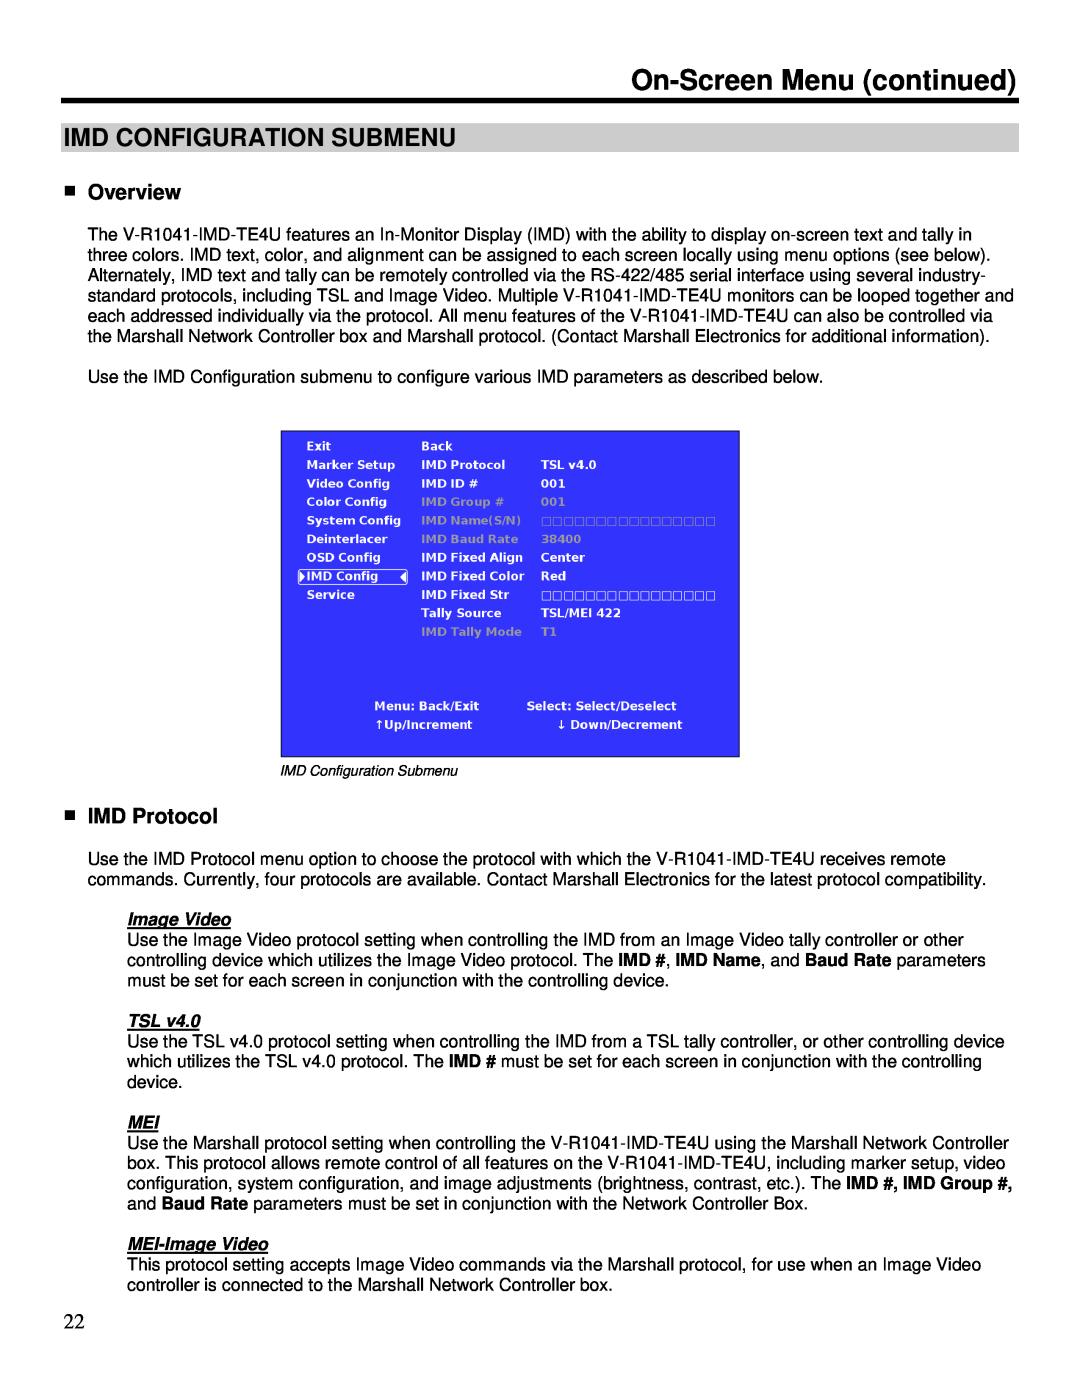 Marshall electronic V-R1041-IMD-TE4U Imd Configuration Submenu, Overview, IMD Protocol, MEI-Image Video 